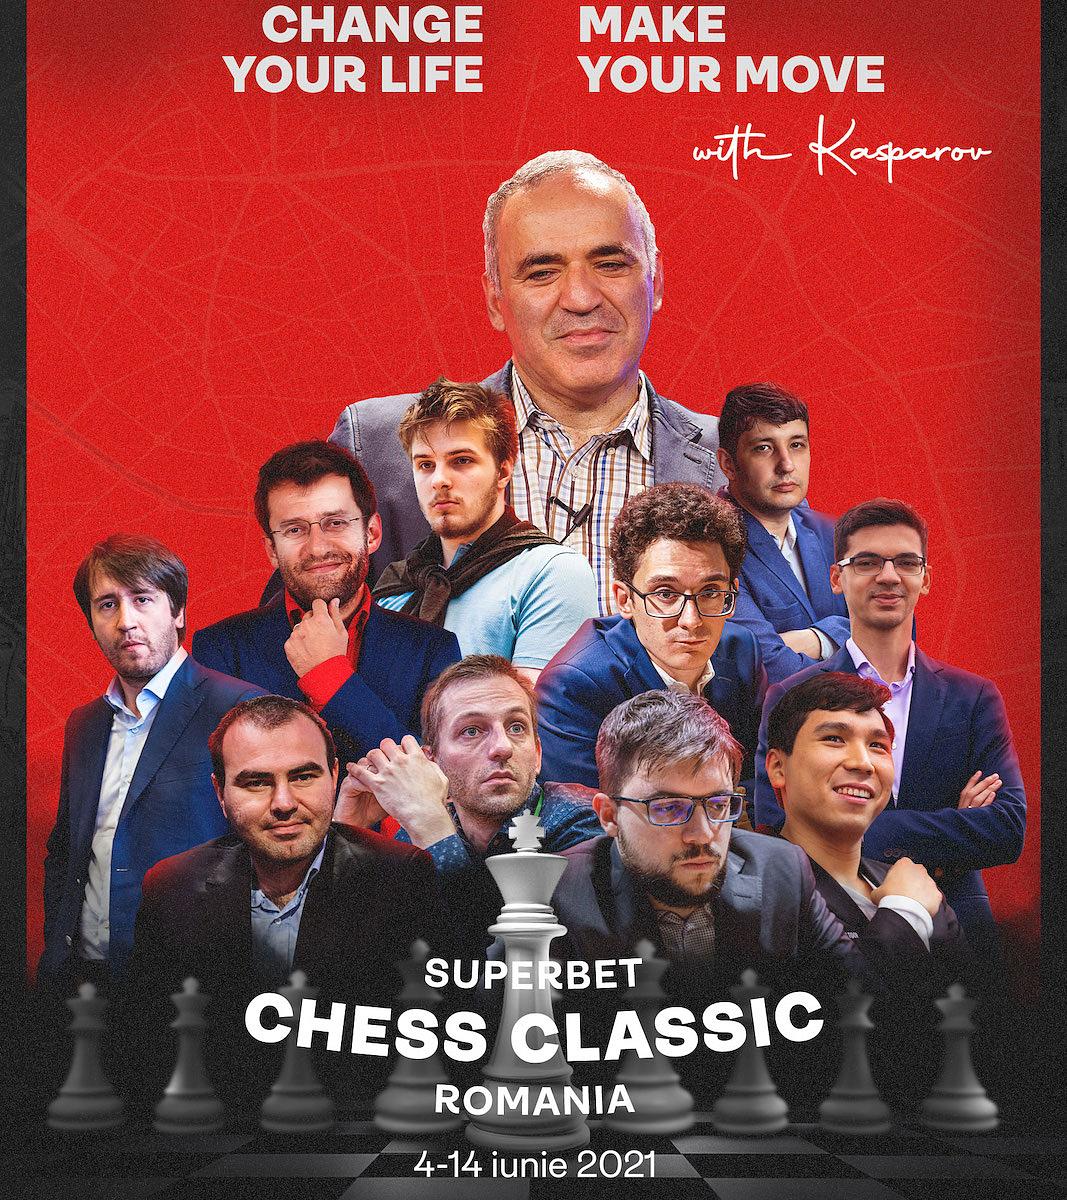 Chess grandmaster Garry Kasparov comes to Bucharest event in June